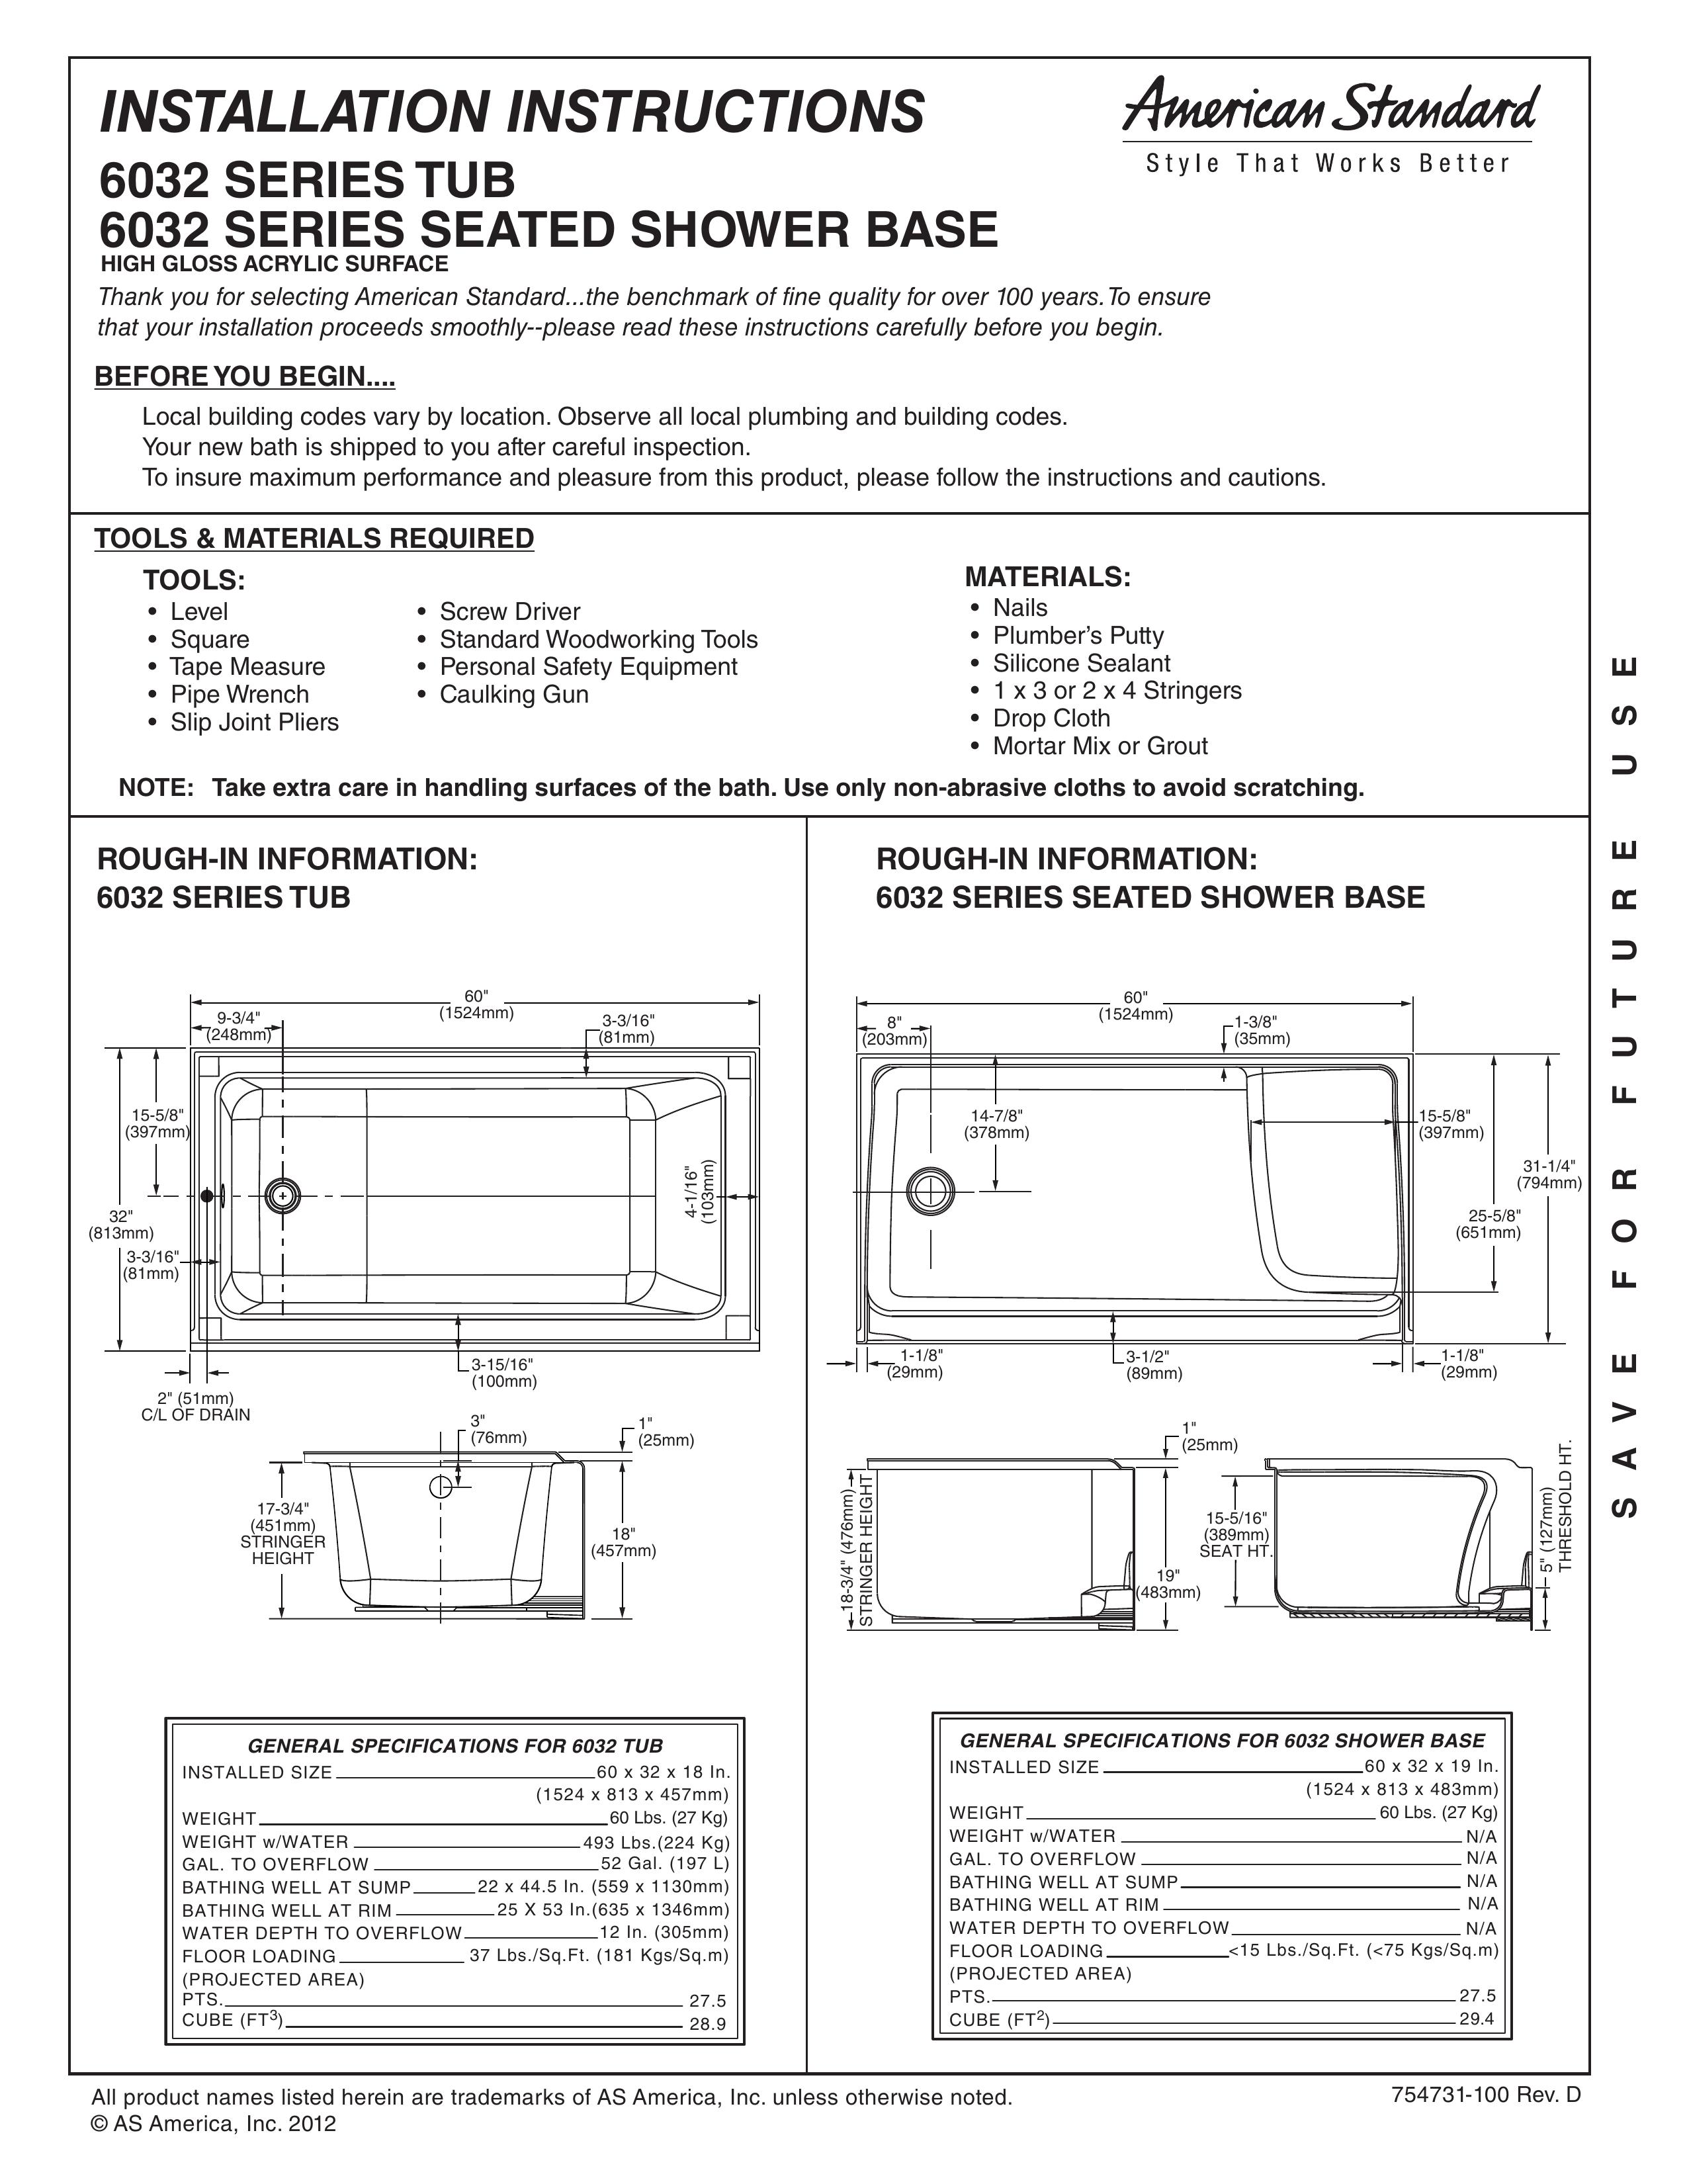 American Standard 6032 Series Seated Shower Base Bathroom Aids User Manual